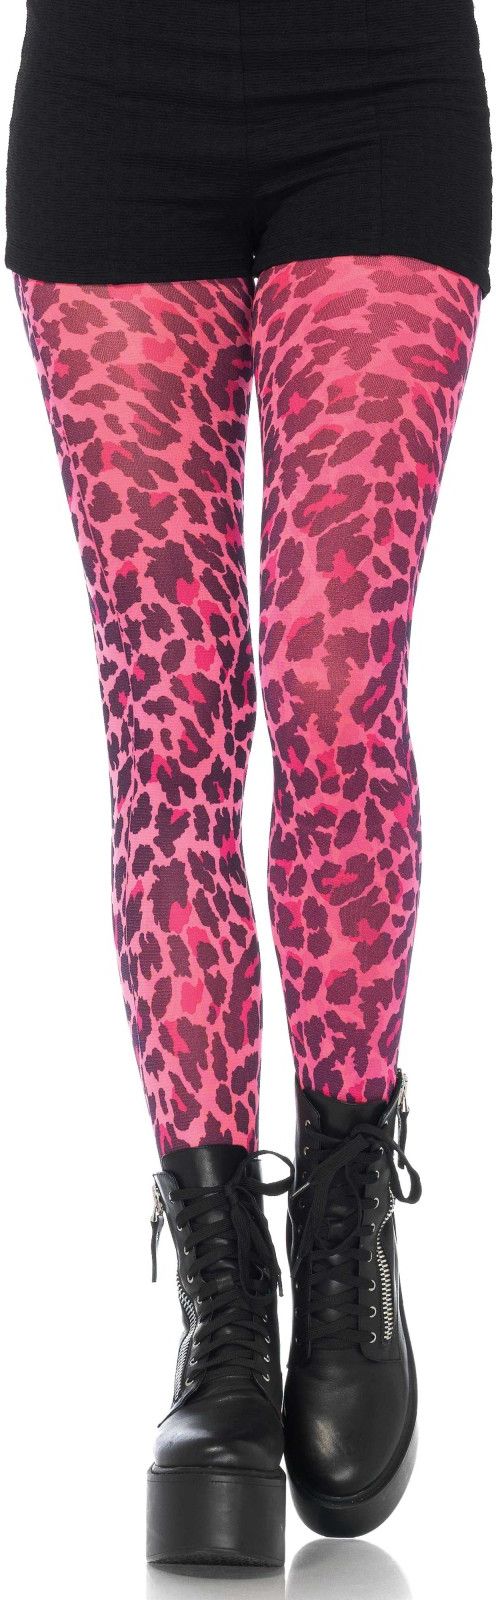 Luipaard print panty neon roze